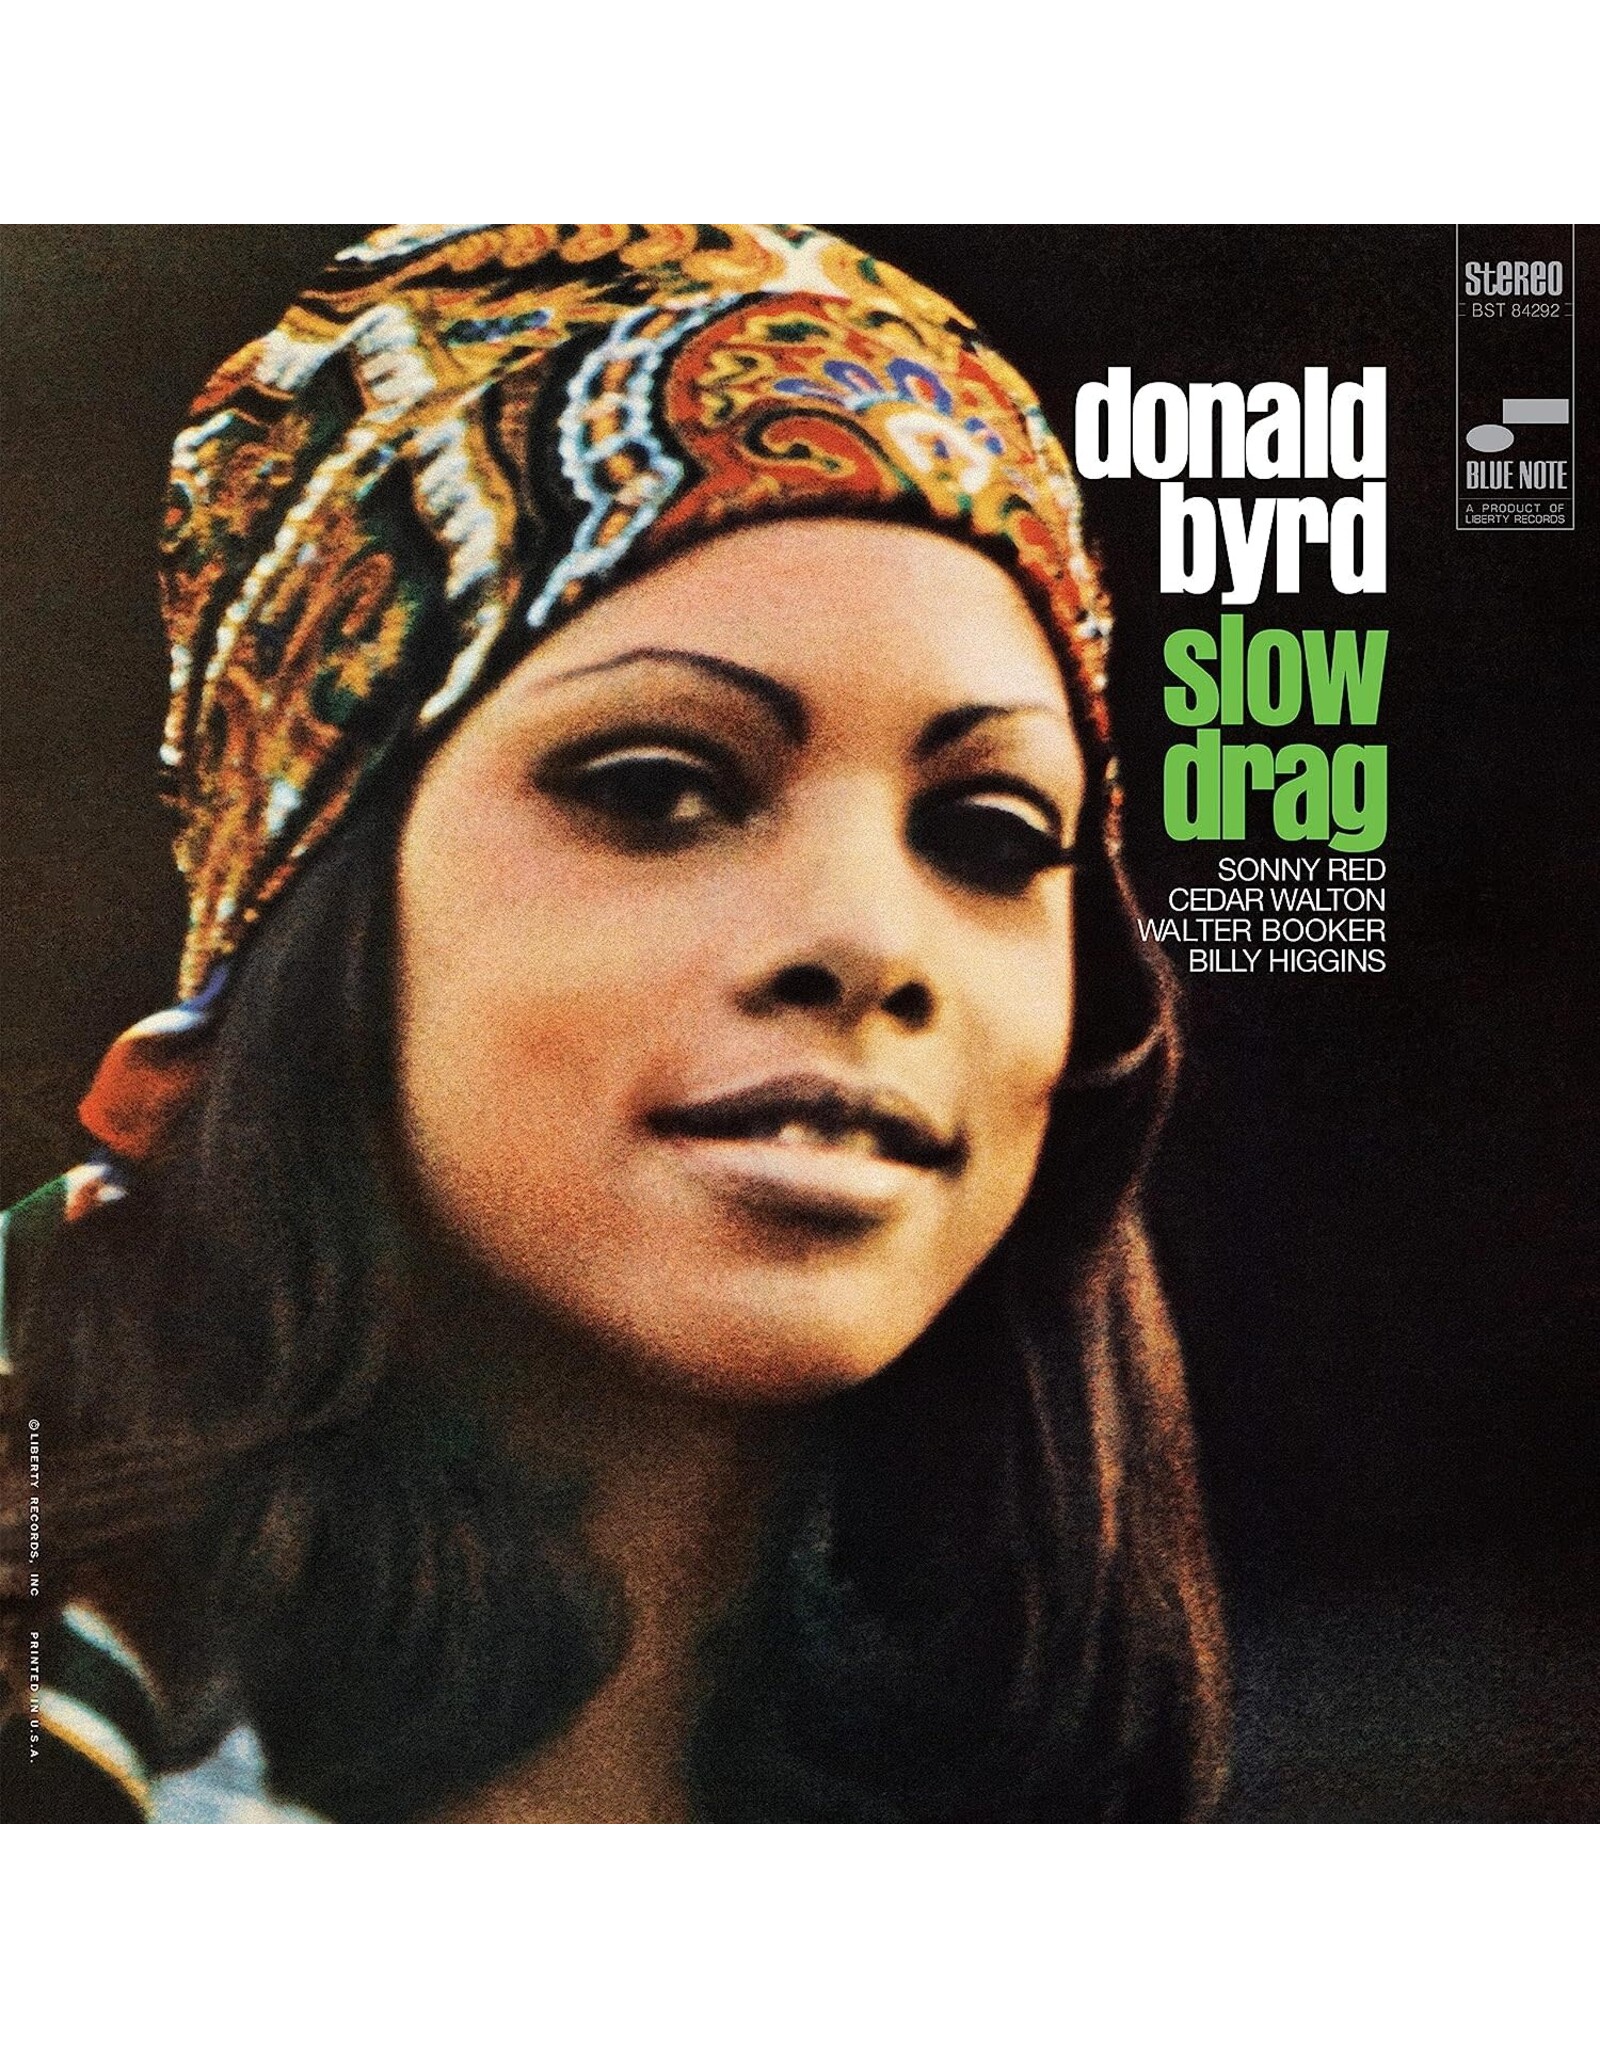 Donald Byrd - Slow Drag (Blue Note Tone Poet)